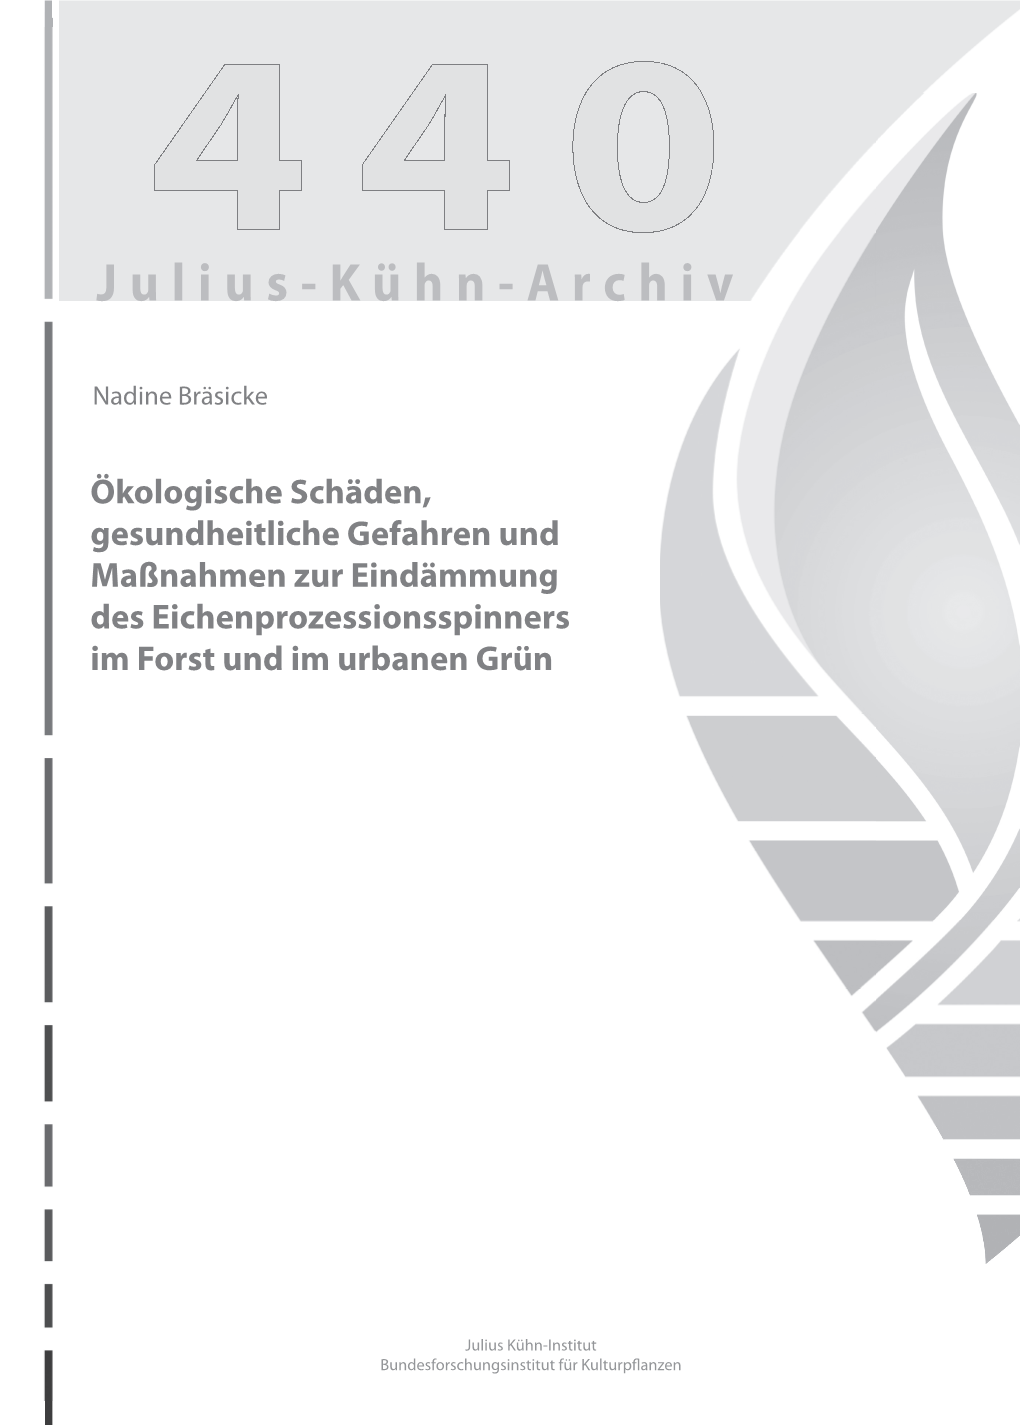 Julius-Kühn-Archiv